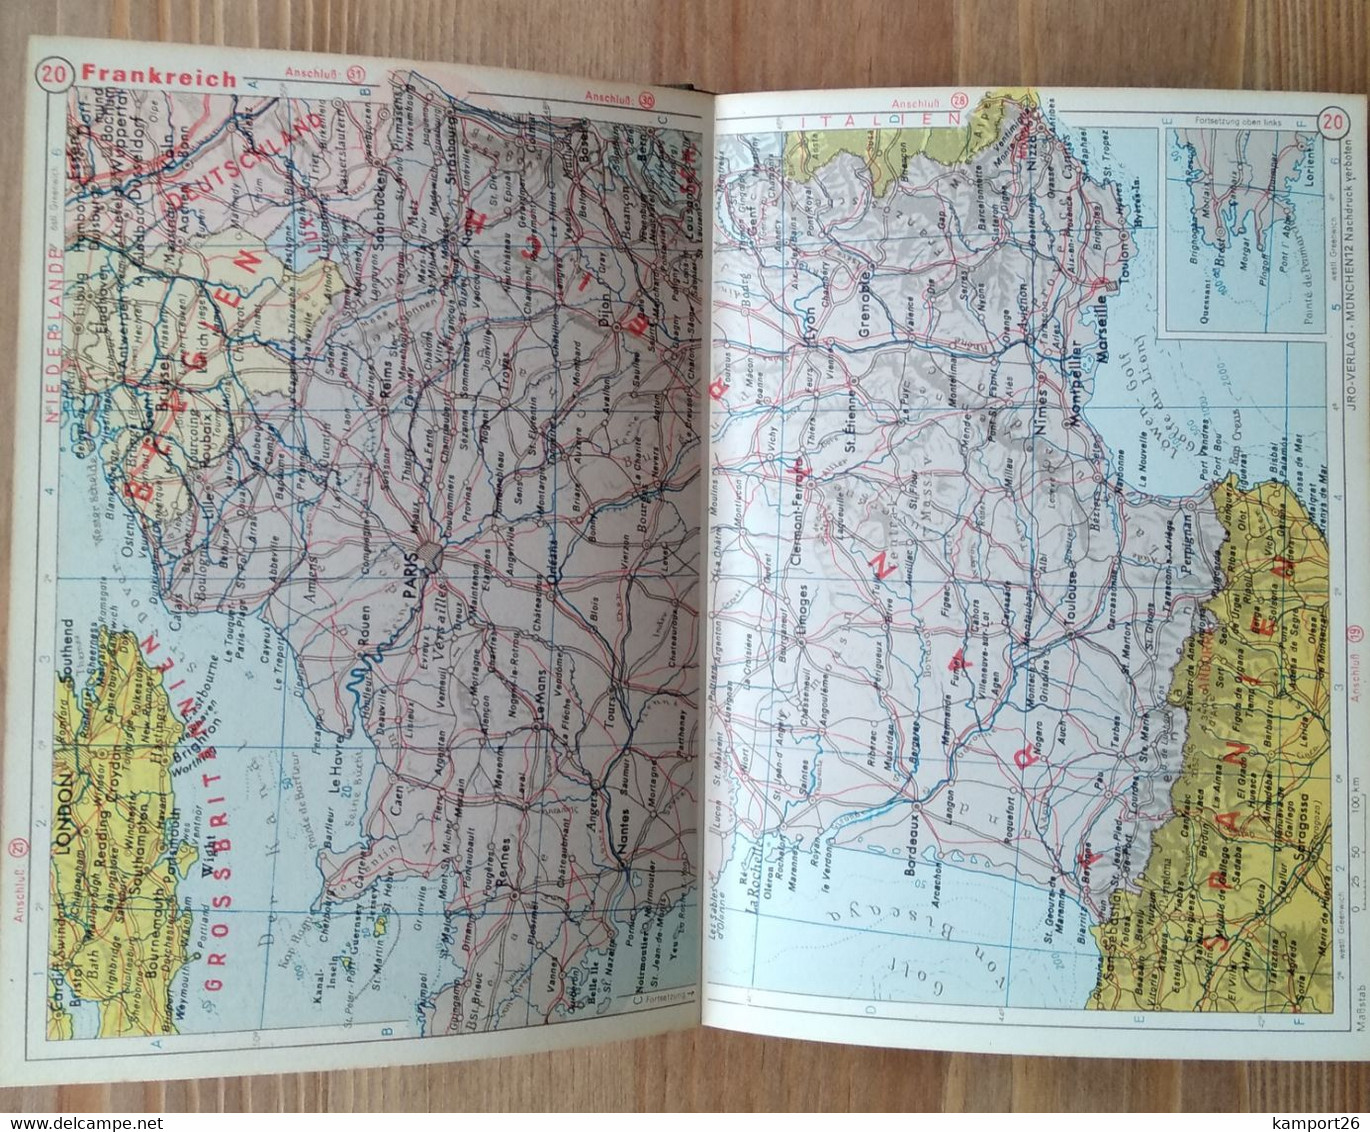 1959 TASCHENATLAS Ernst Kremling CARL PRIOR Illustrated ATLAS Geographic 29rd Edition Maps - Mapamundis